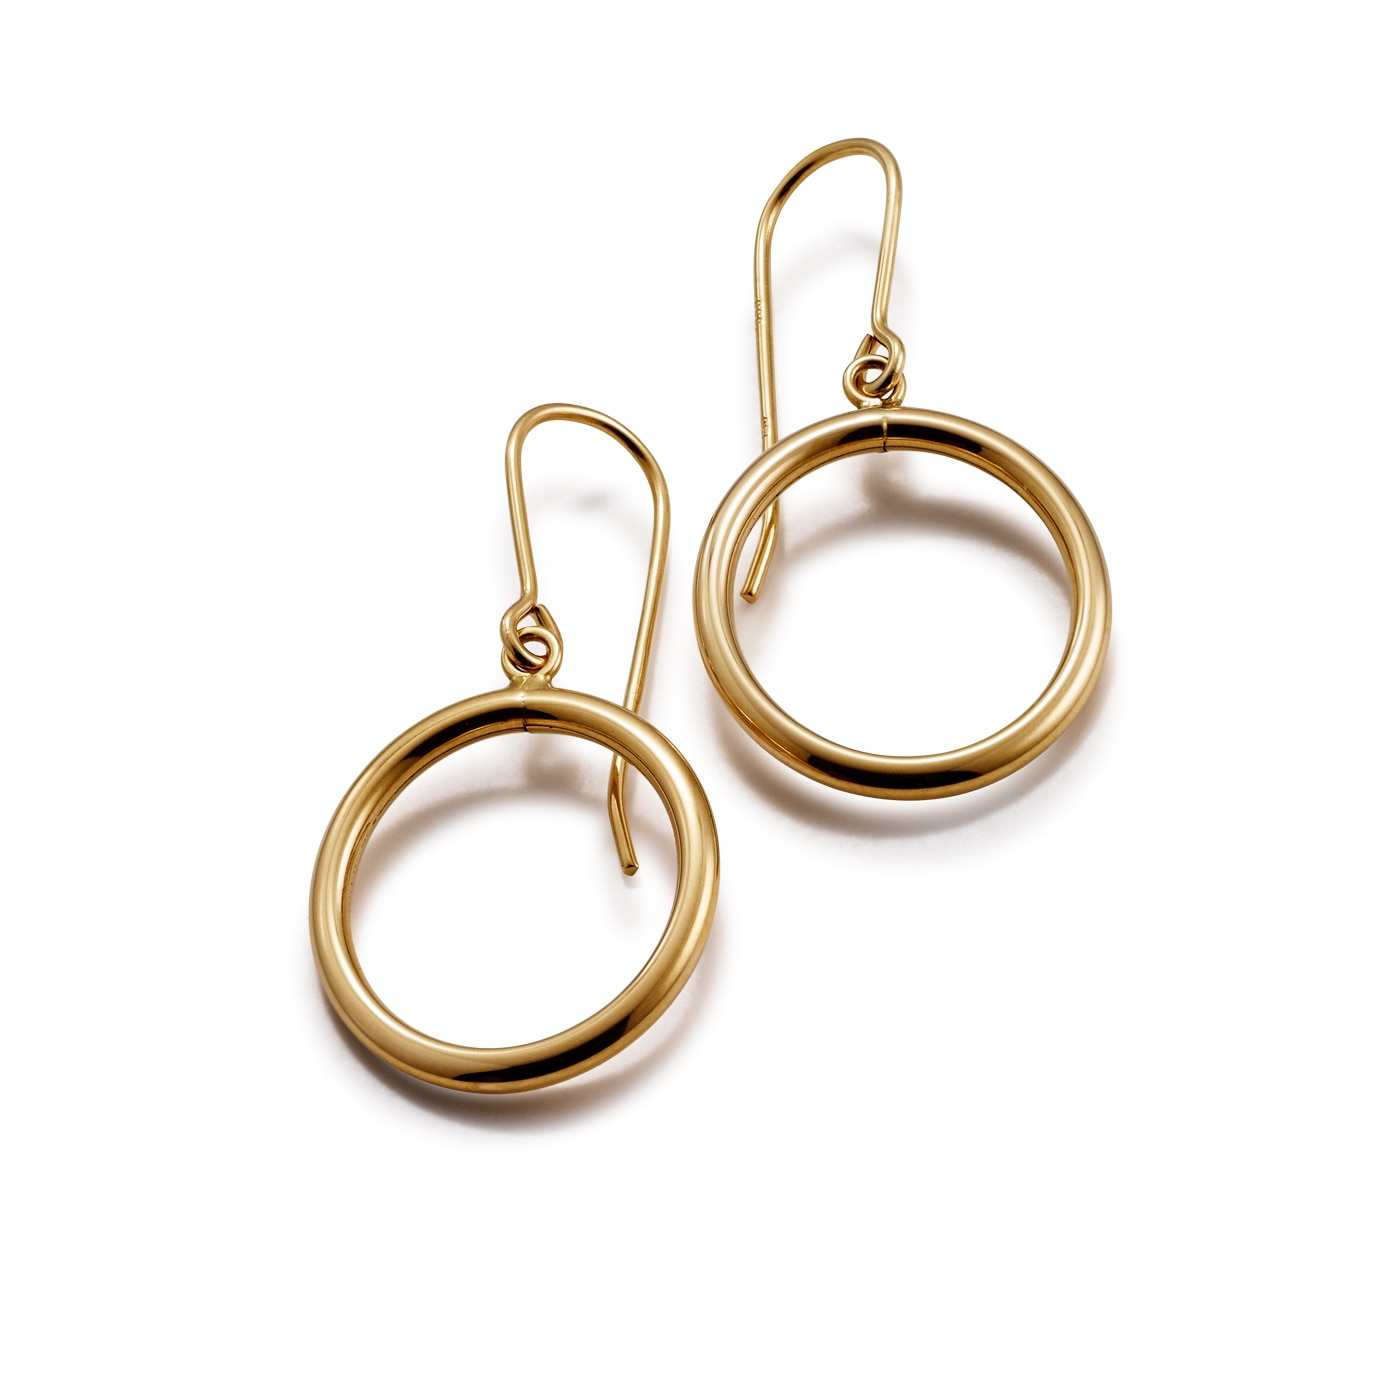 Gold Circles earrings